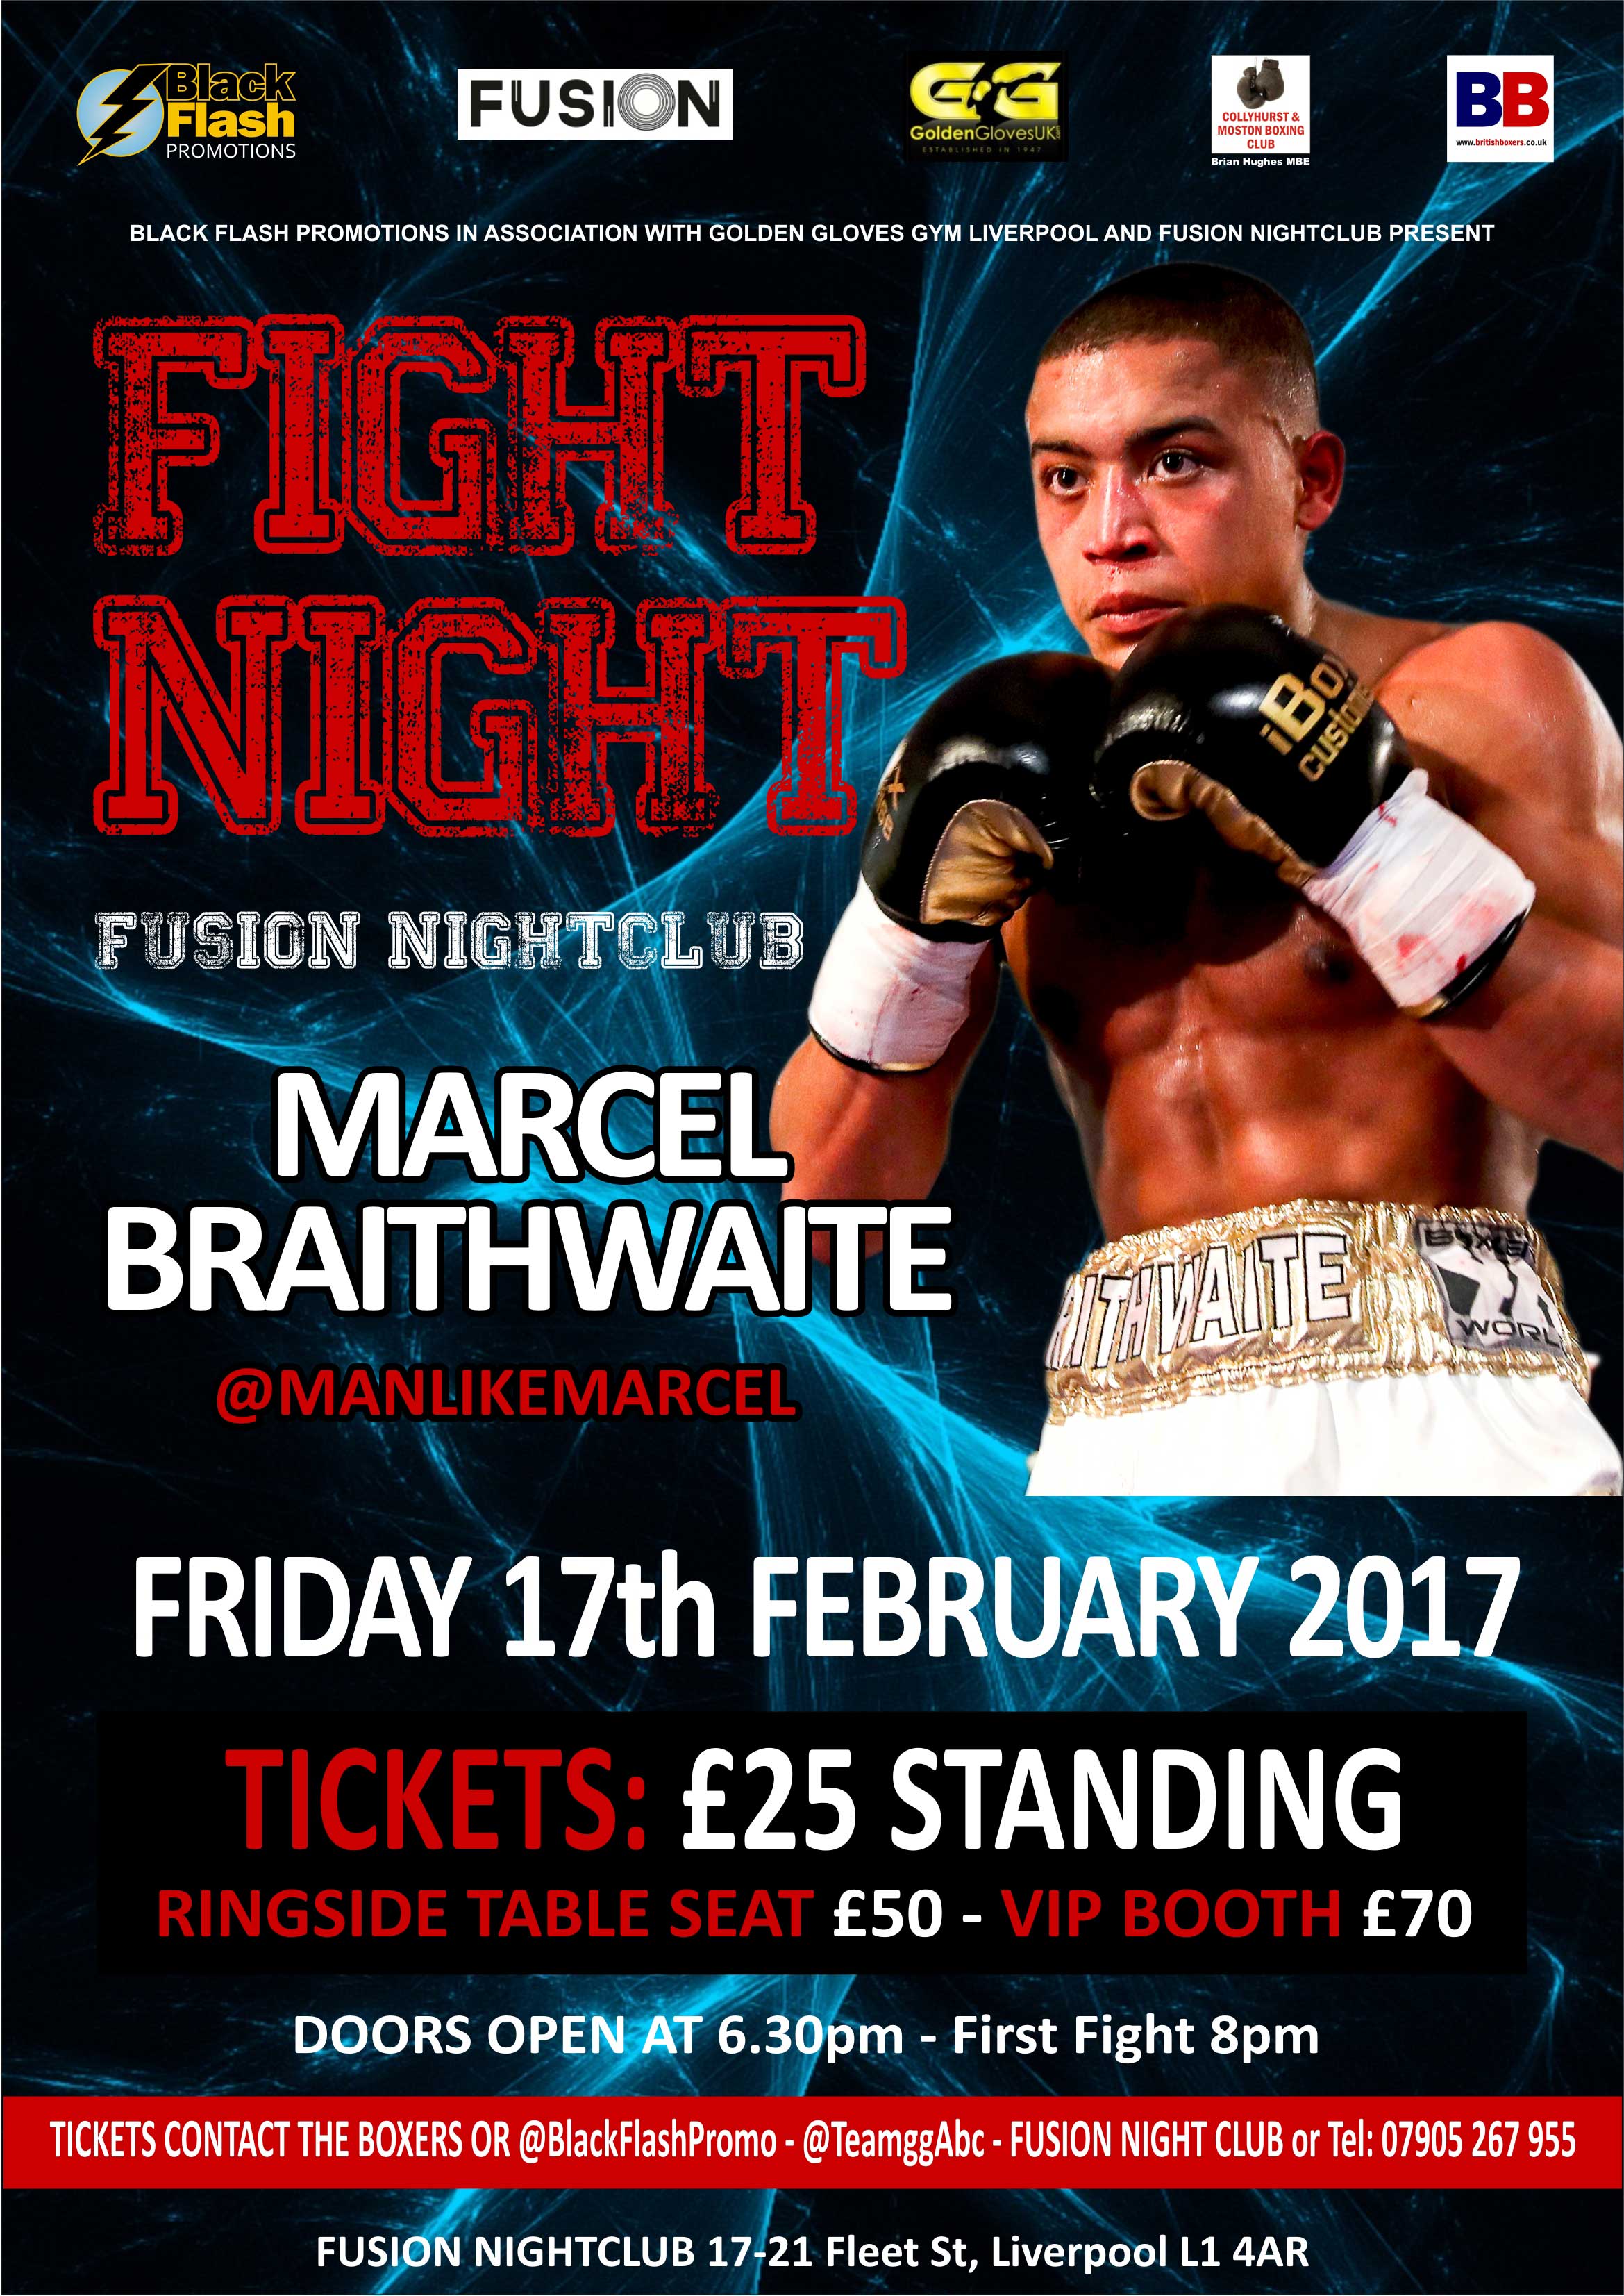 marcel-braithwaite-fusion-nightclub-feb-17